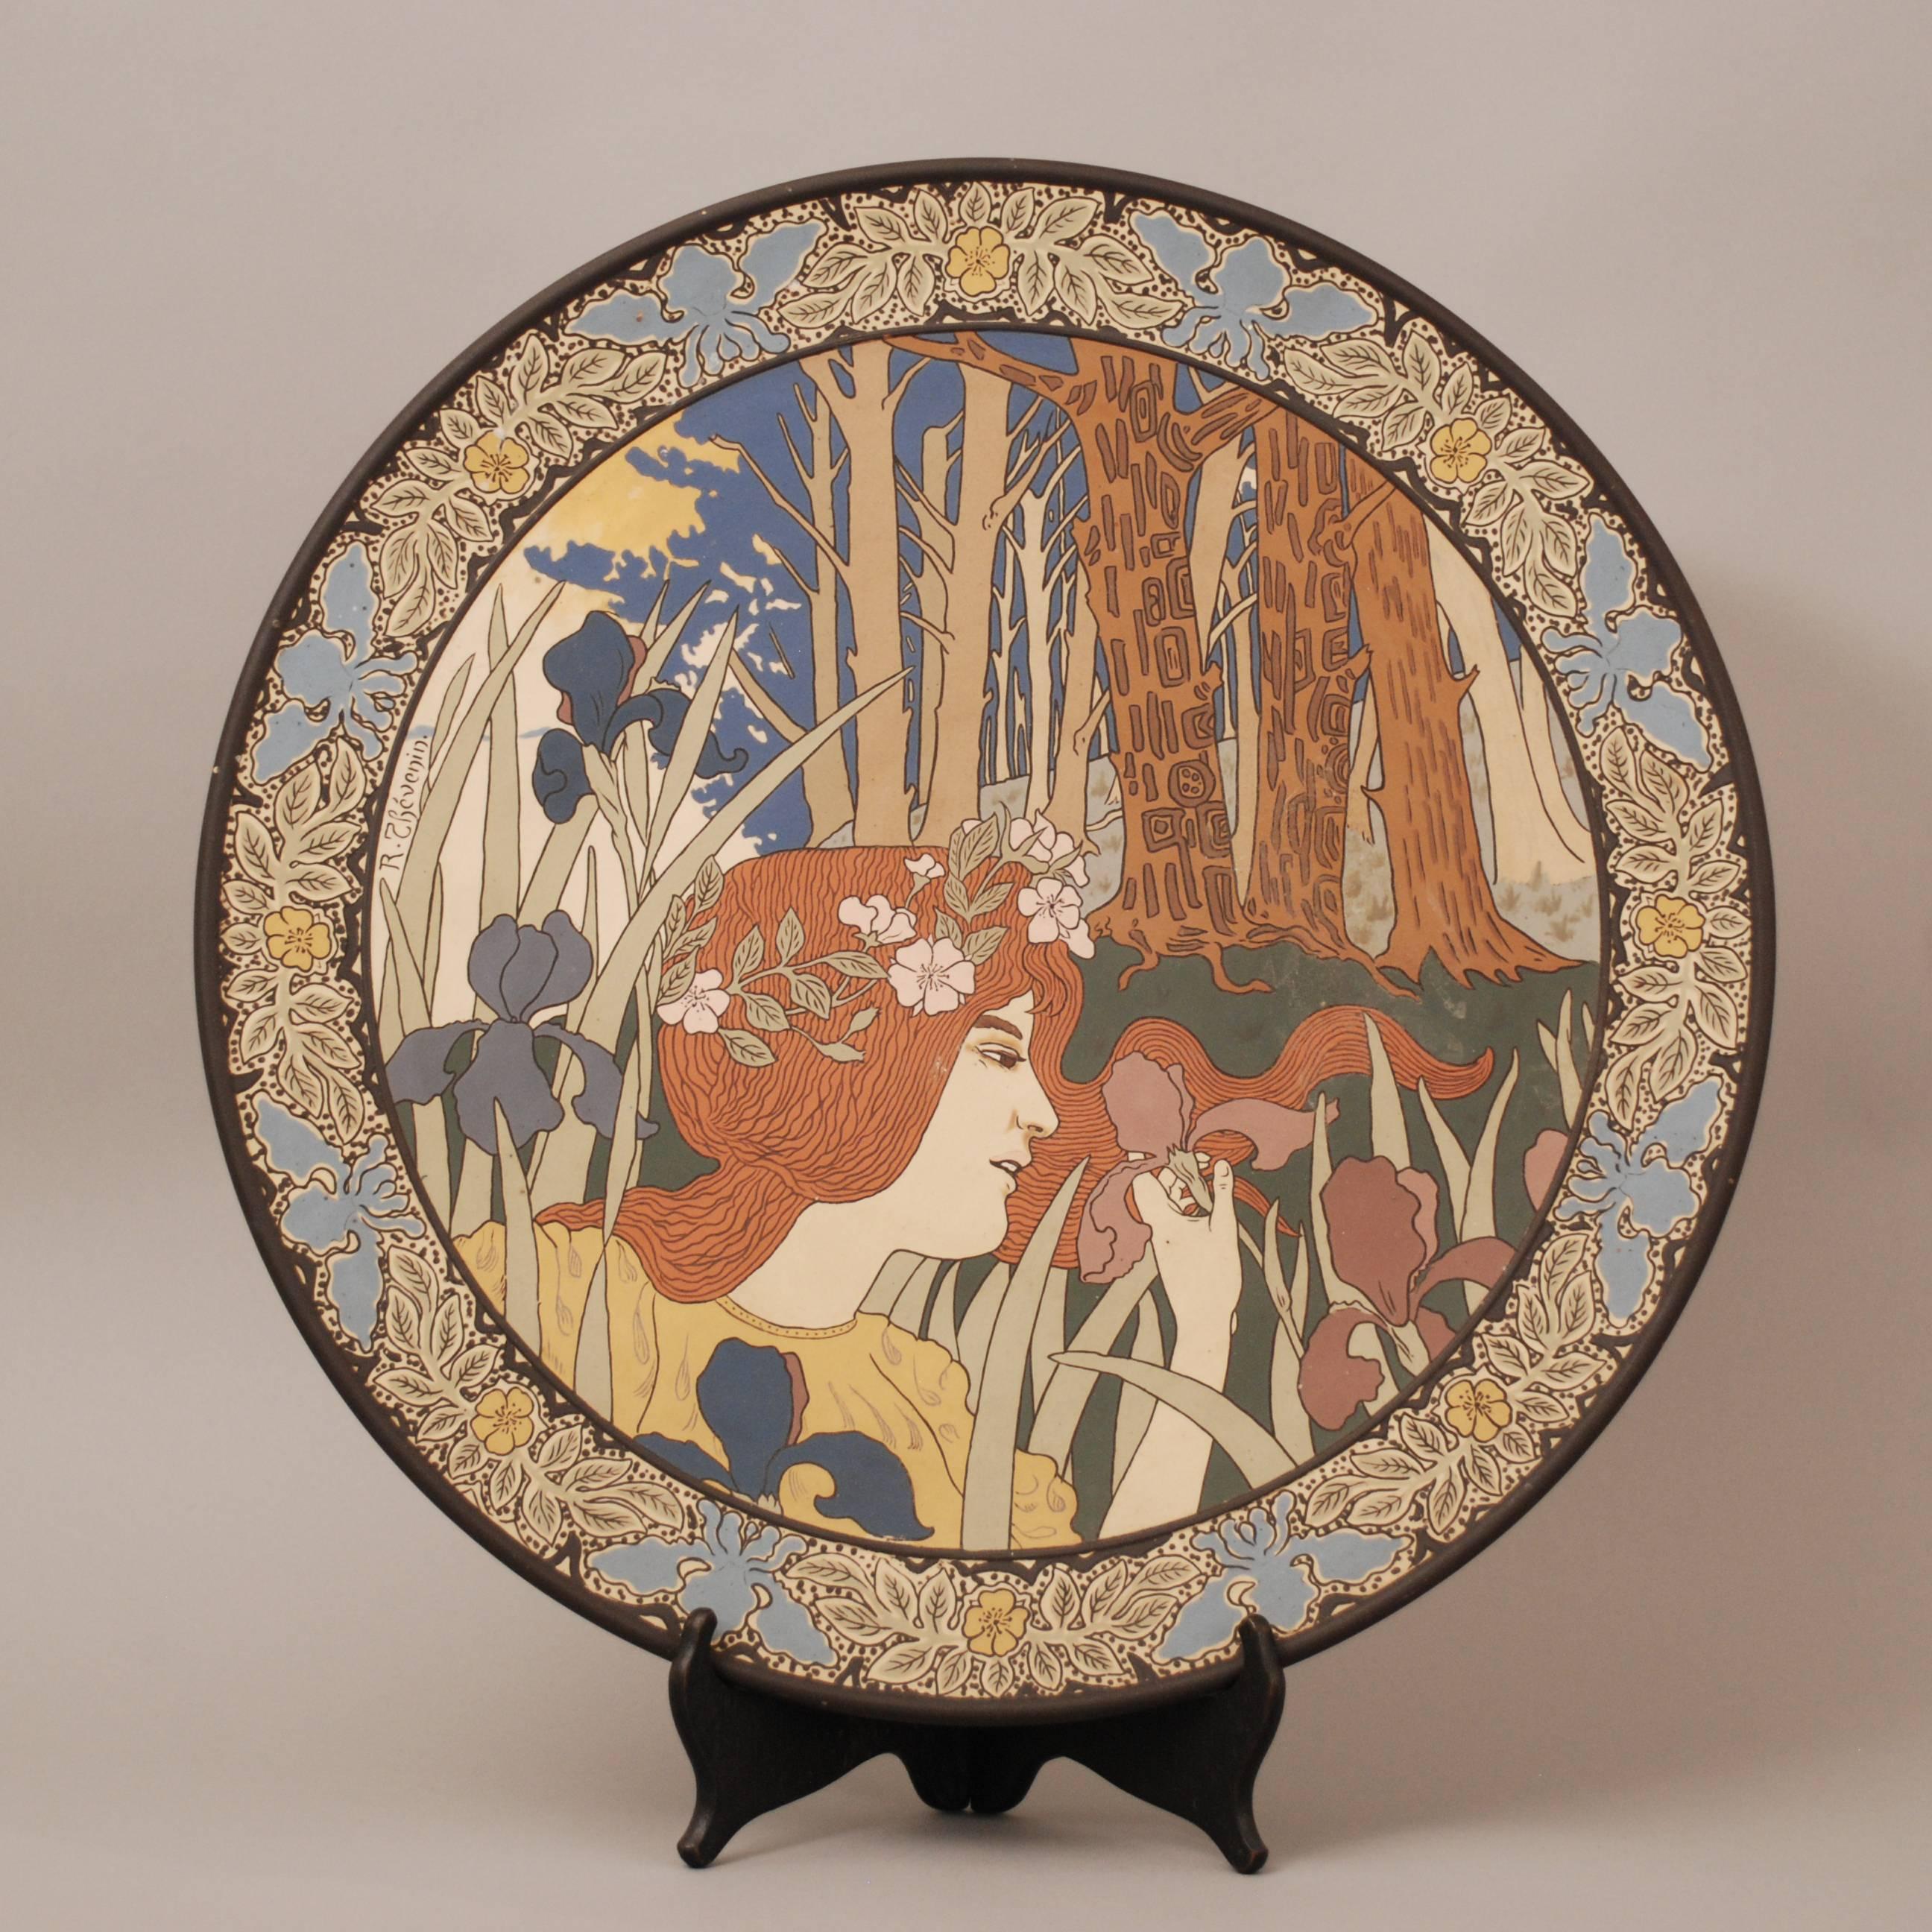 Ceramic plate by Charles René Thevenin for Villeroy & Boch, Mettlach, Germany 1899. Symbolistic/jugendstil decor.